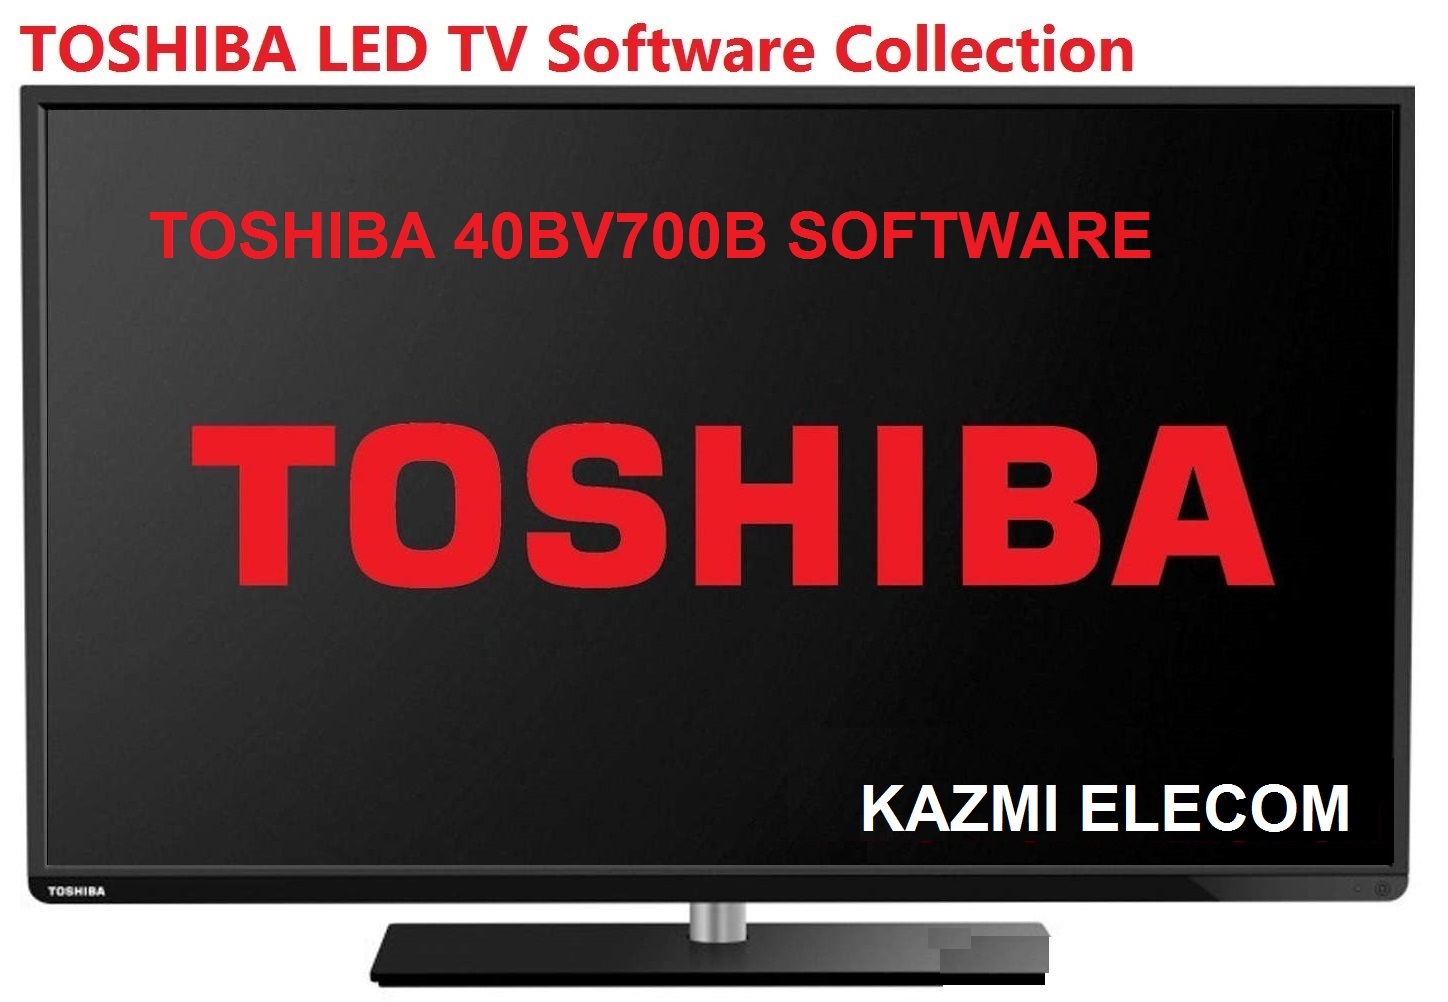 Toshiba 40Bv700B